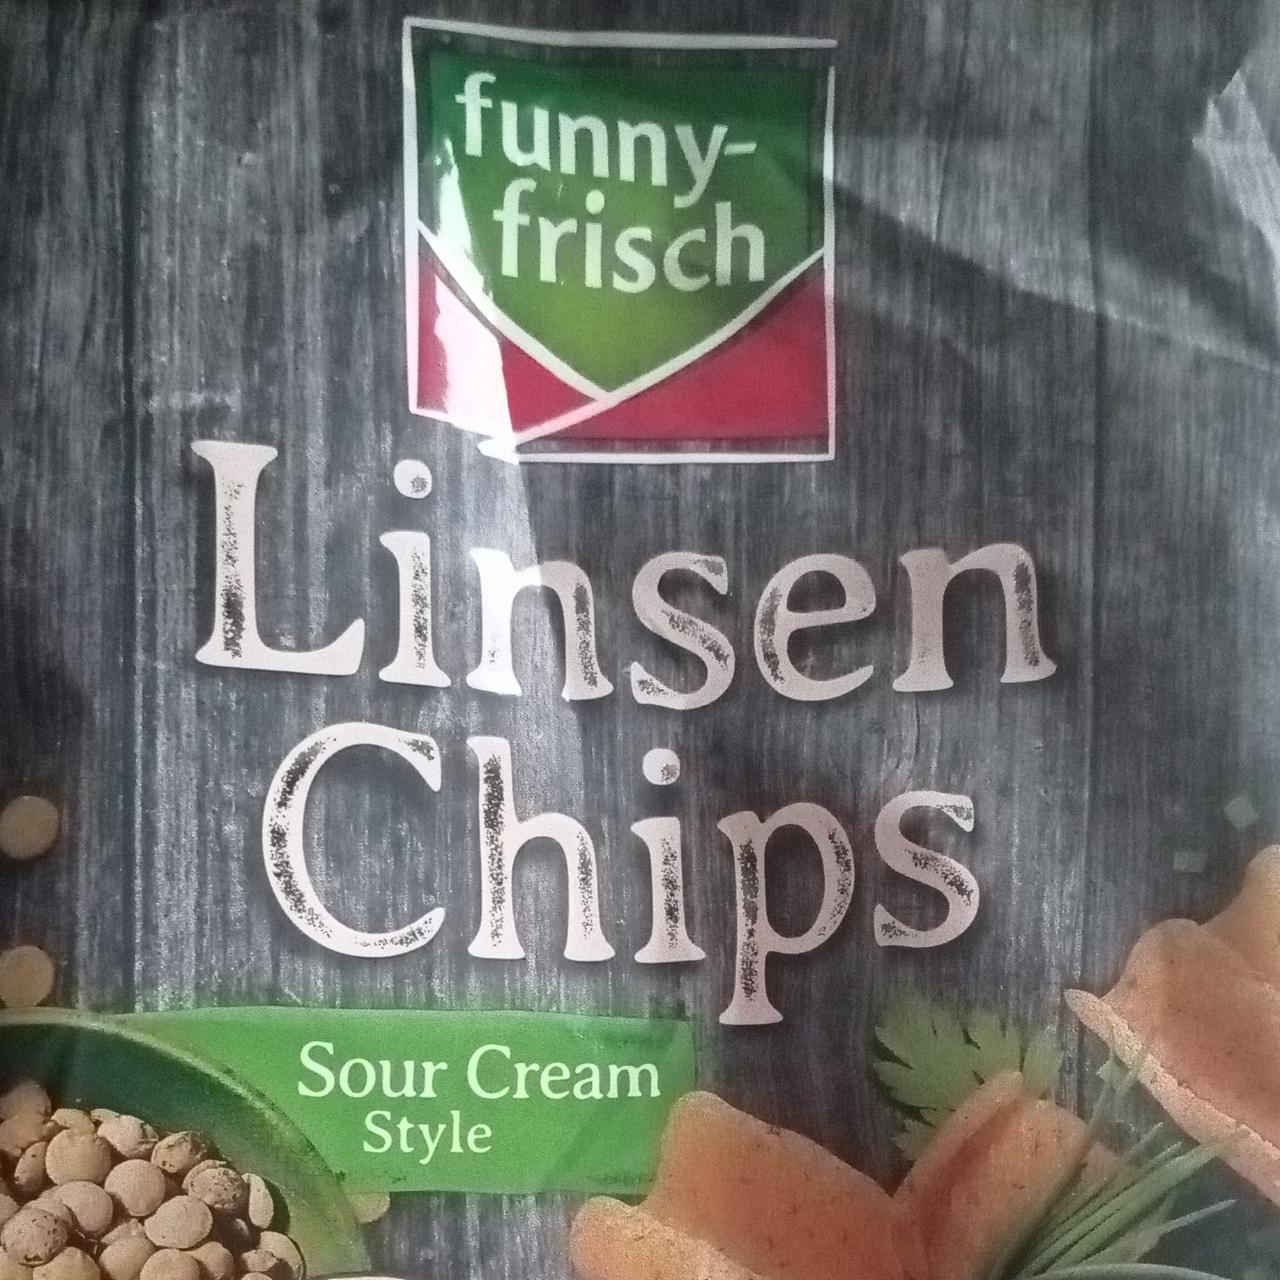 Фото - Linsen Chips funny-frisch